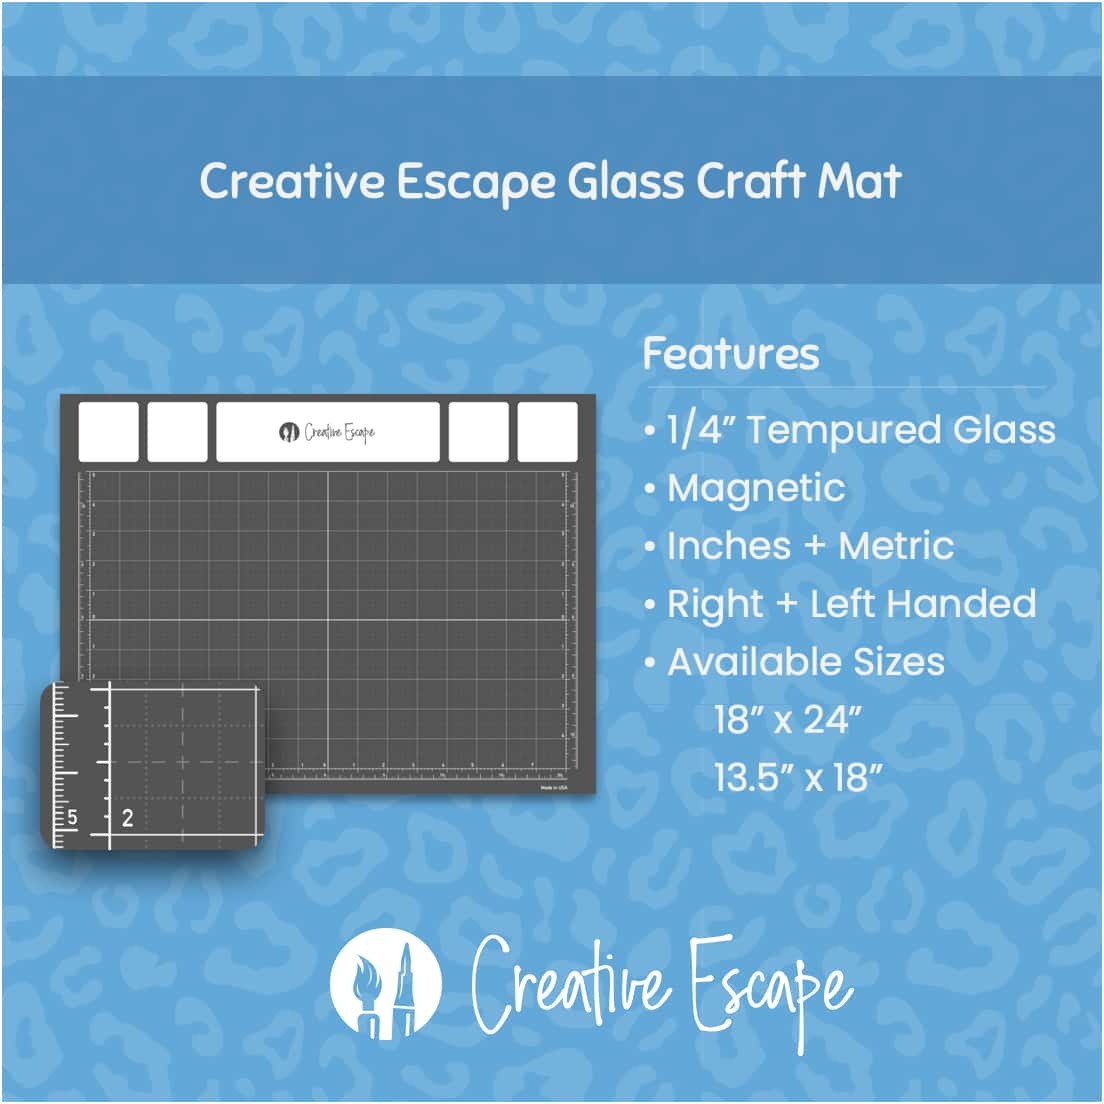 Glass Craft Mat - Creative Escape